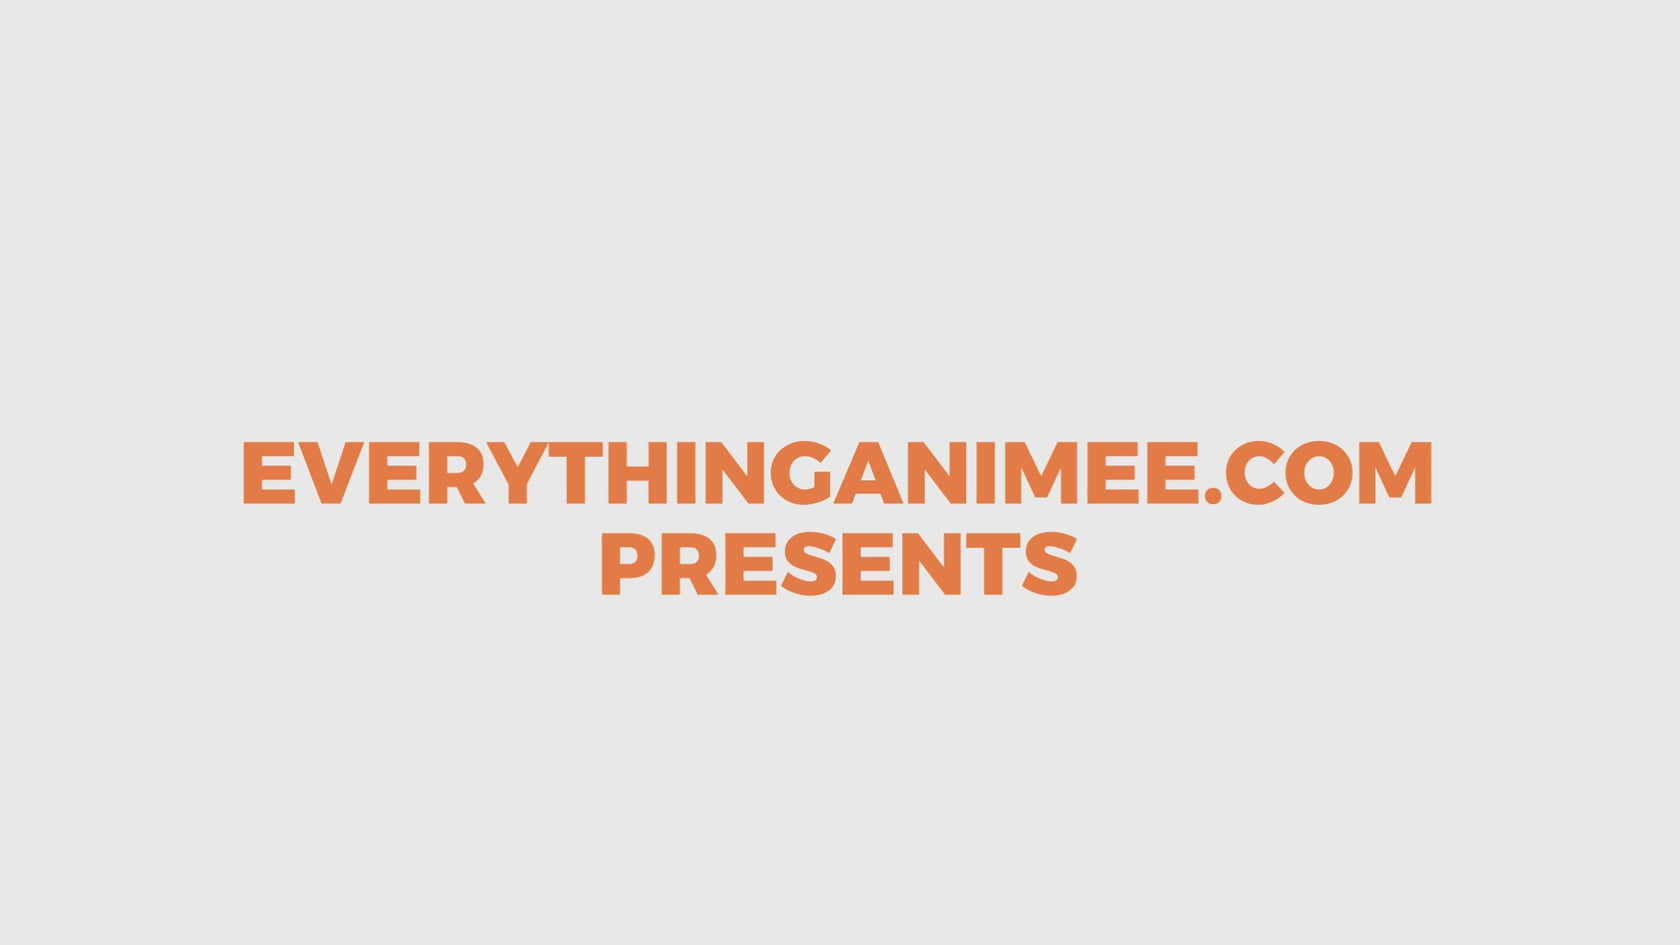 Short video on the best online store to buy Mange & Anime Merchandise